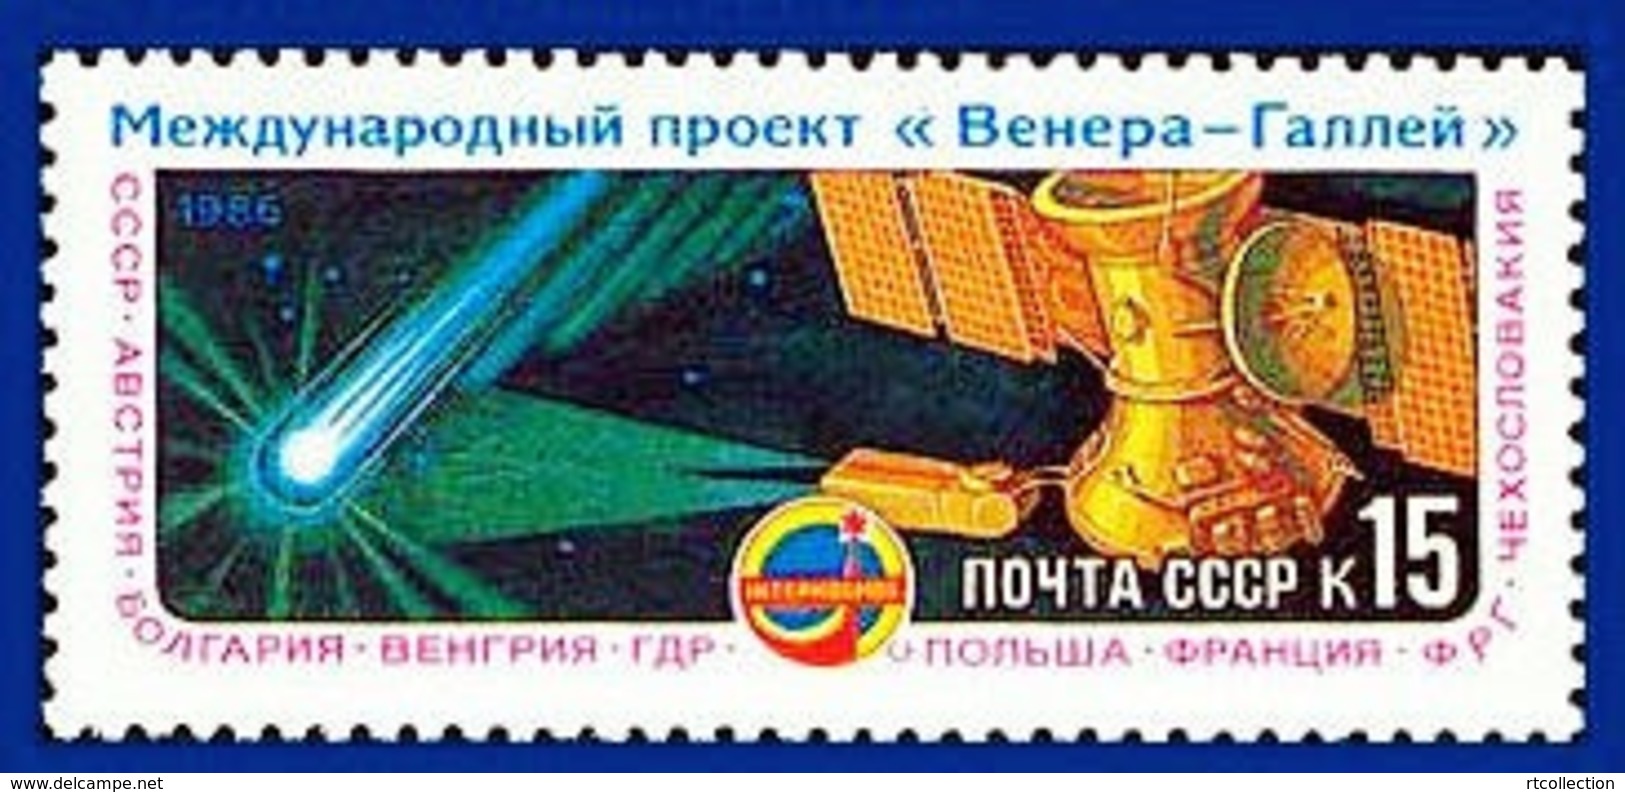 USSR Russia 1986 International Space Program Venus & Halley's Comet Satellite Sciences Soviet Union Stamp MNH - Russie & URSS